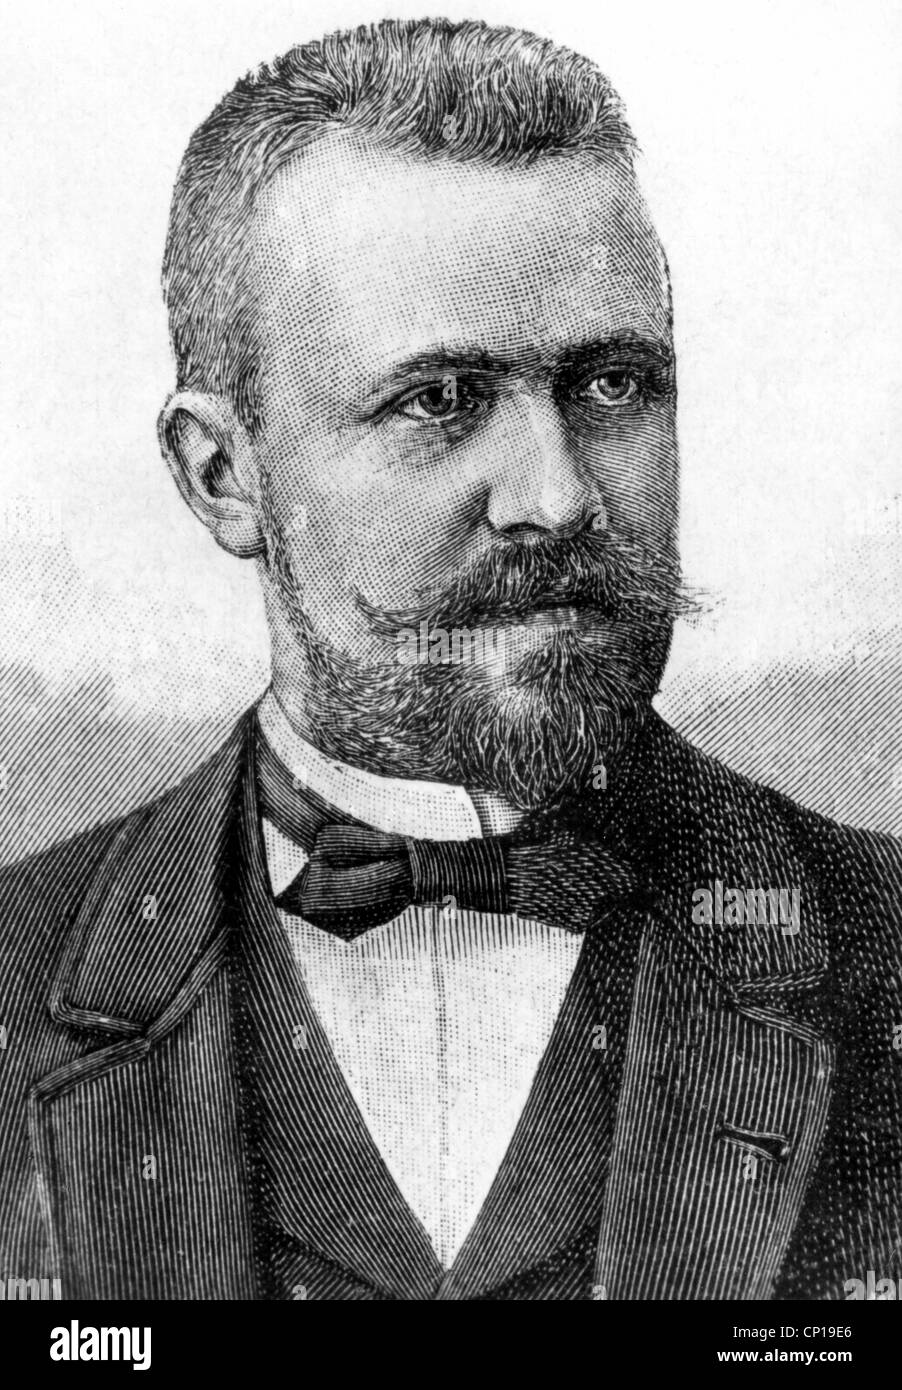 Drygalski, Erich von, 9.2.1865 - 10.1.1949, German geographer, Antarctic explorer, portrait, wood engraving, 19th century, Stock Photo